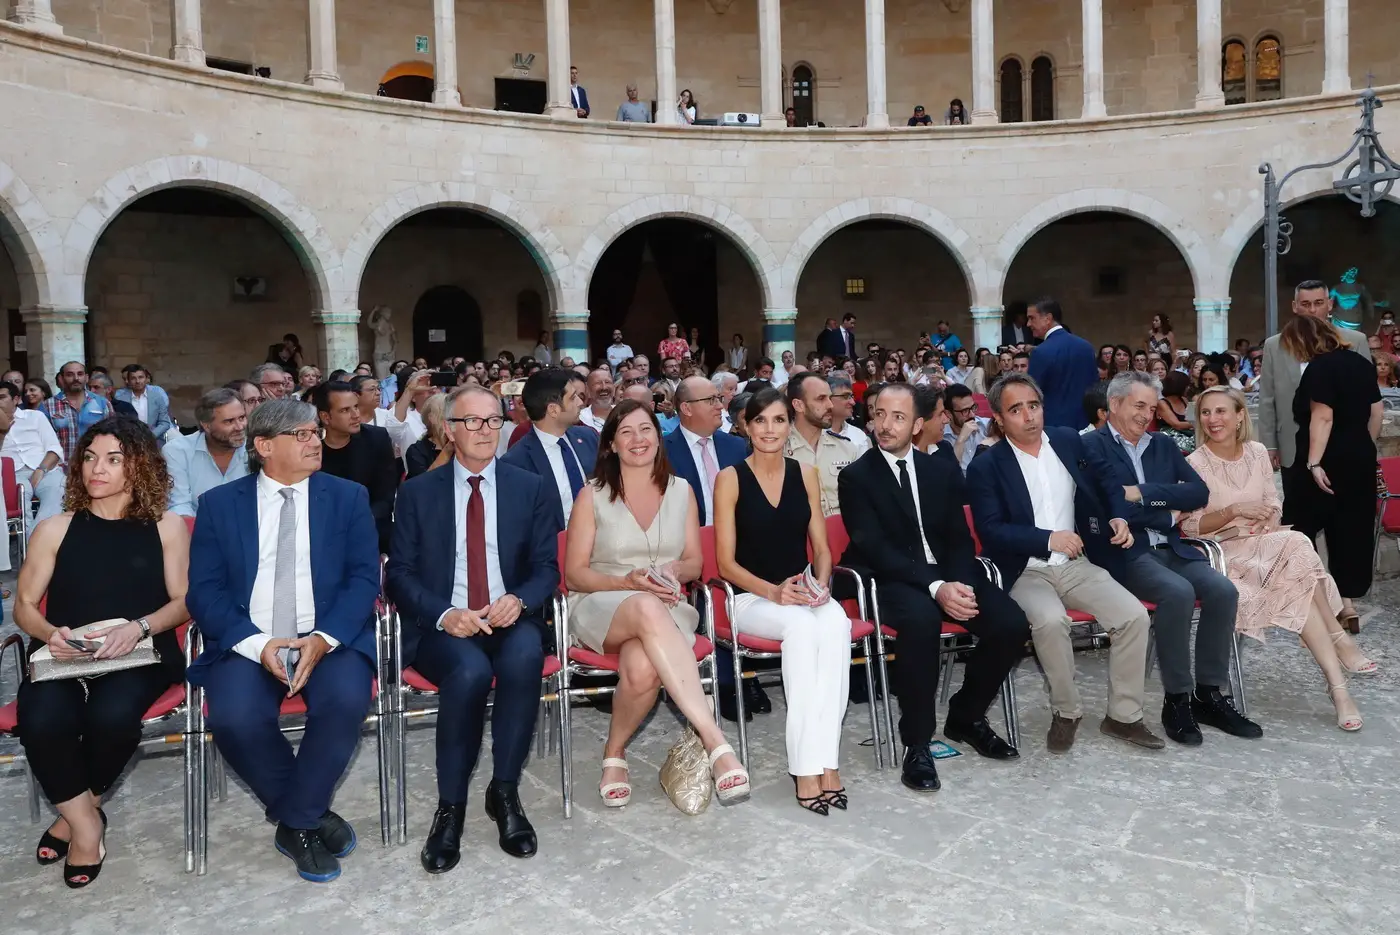 Queen Letizia wore black top and White trouser for film festival inauguration in Palma